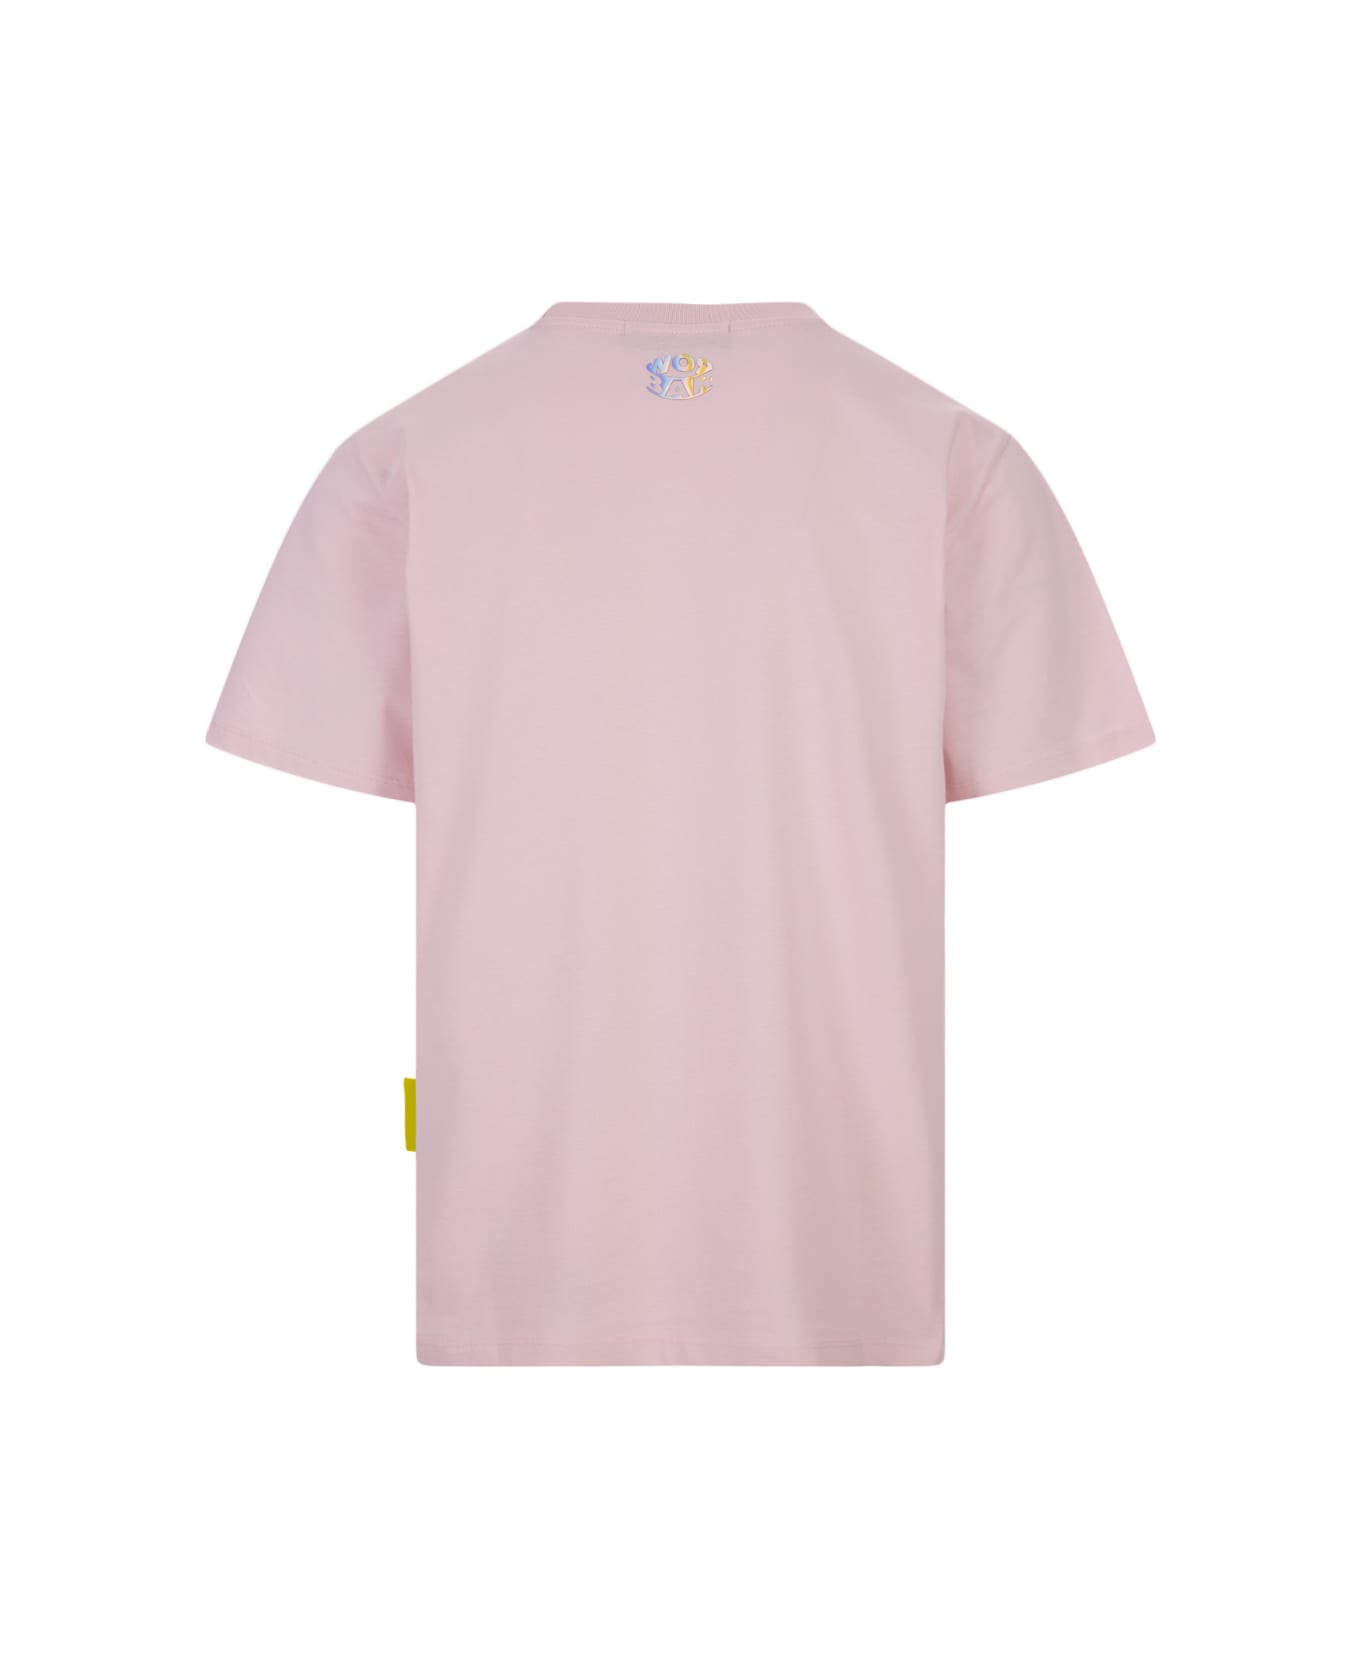 Barrow Pink T-shirt With Barrow Logo - Pink